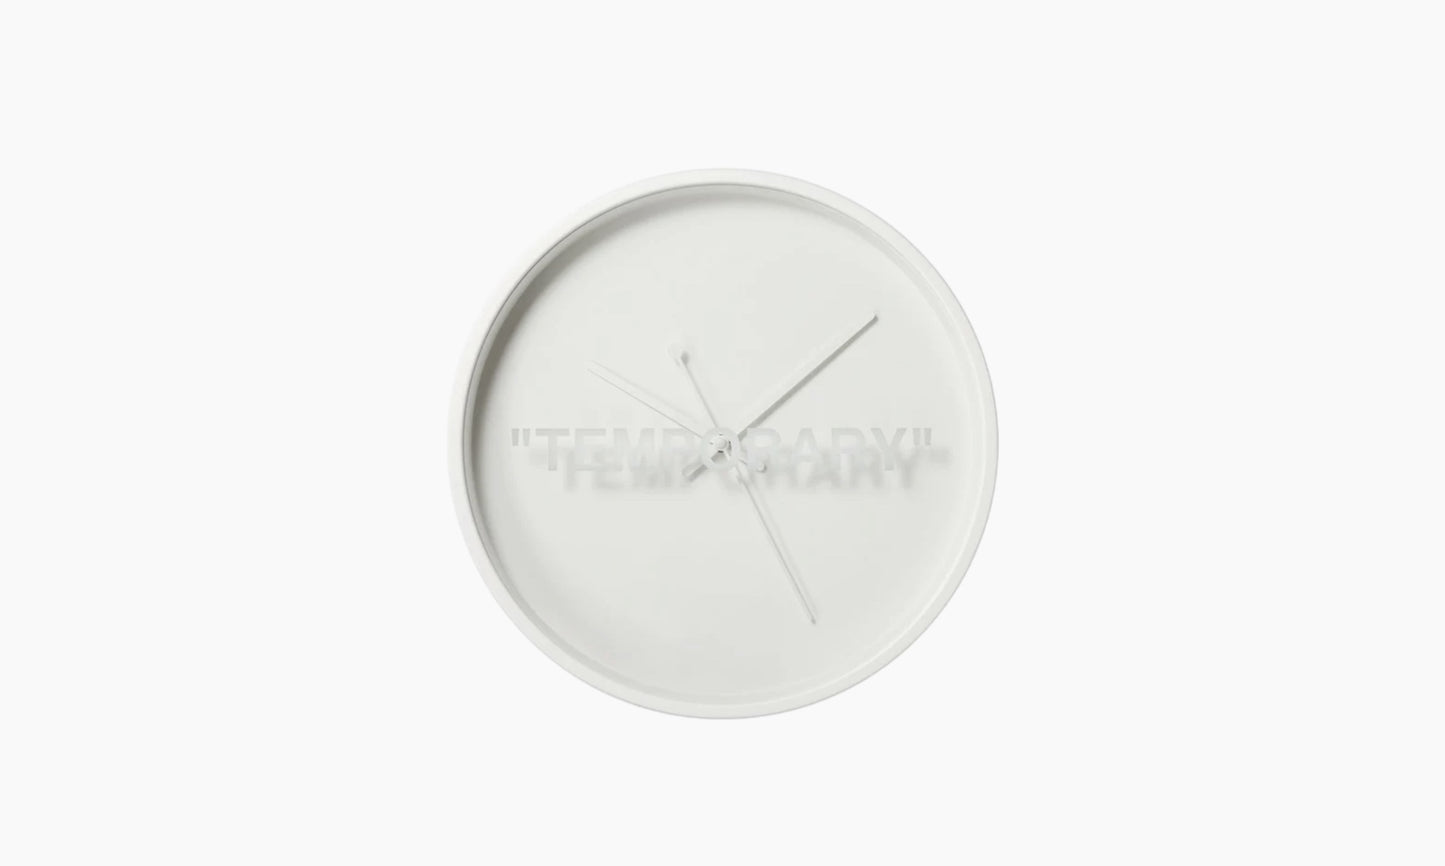 Virgil Abloh x IKEA TEMPORARY Clock